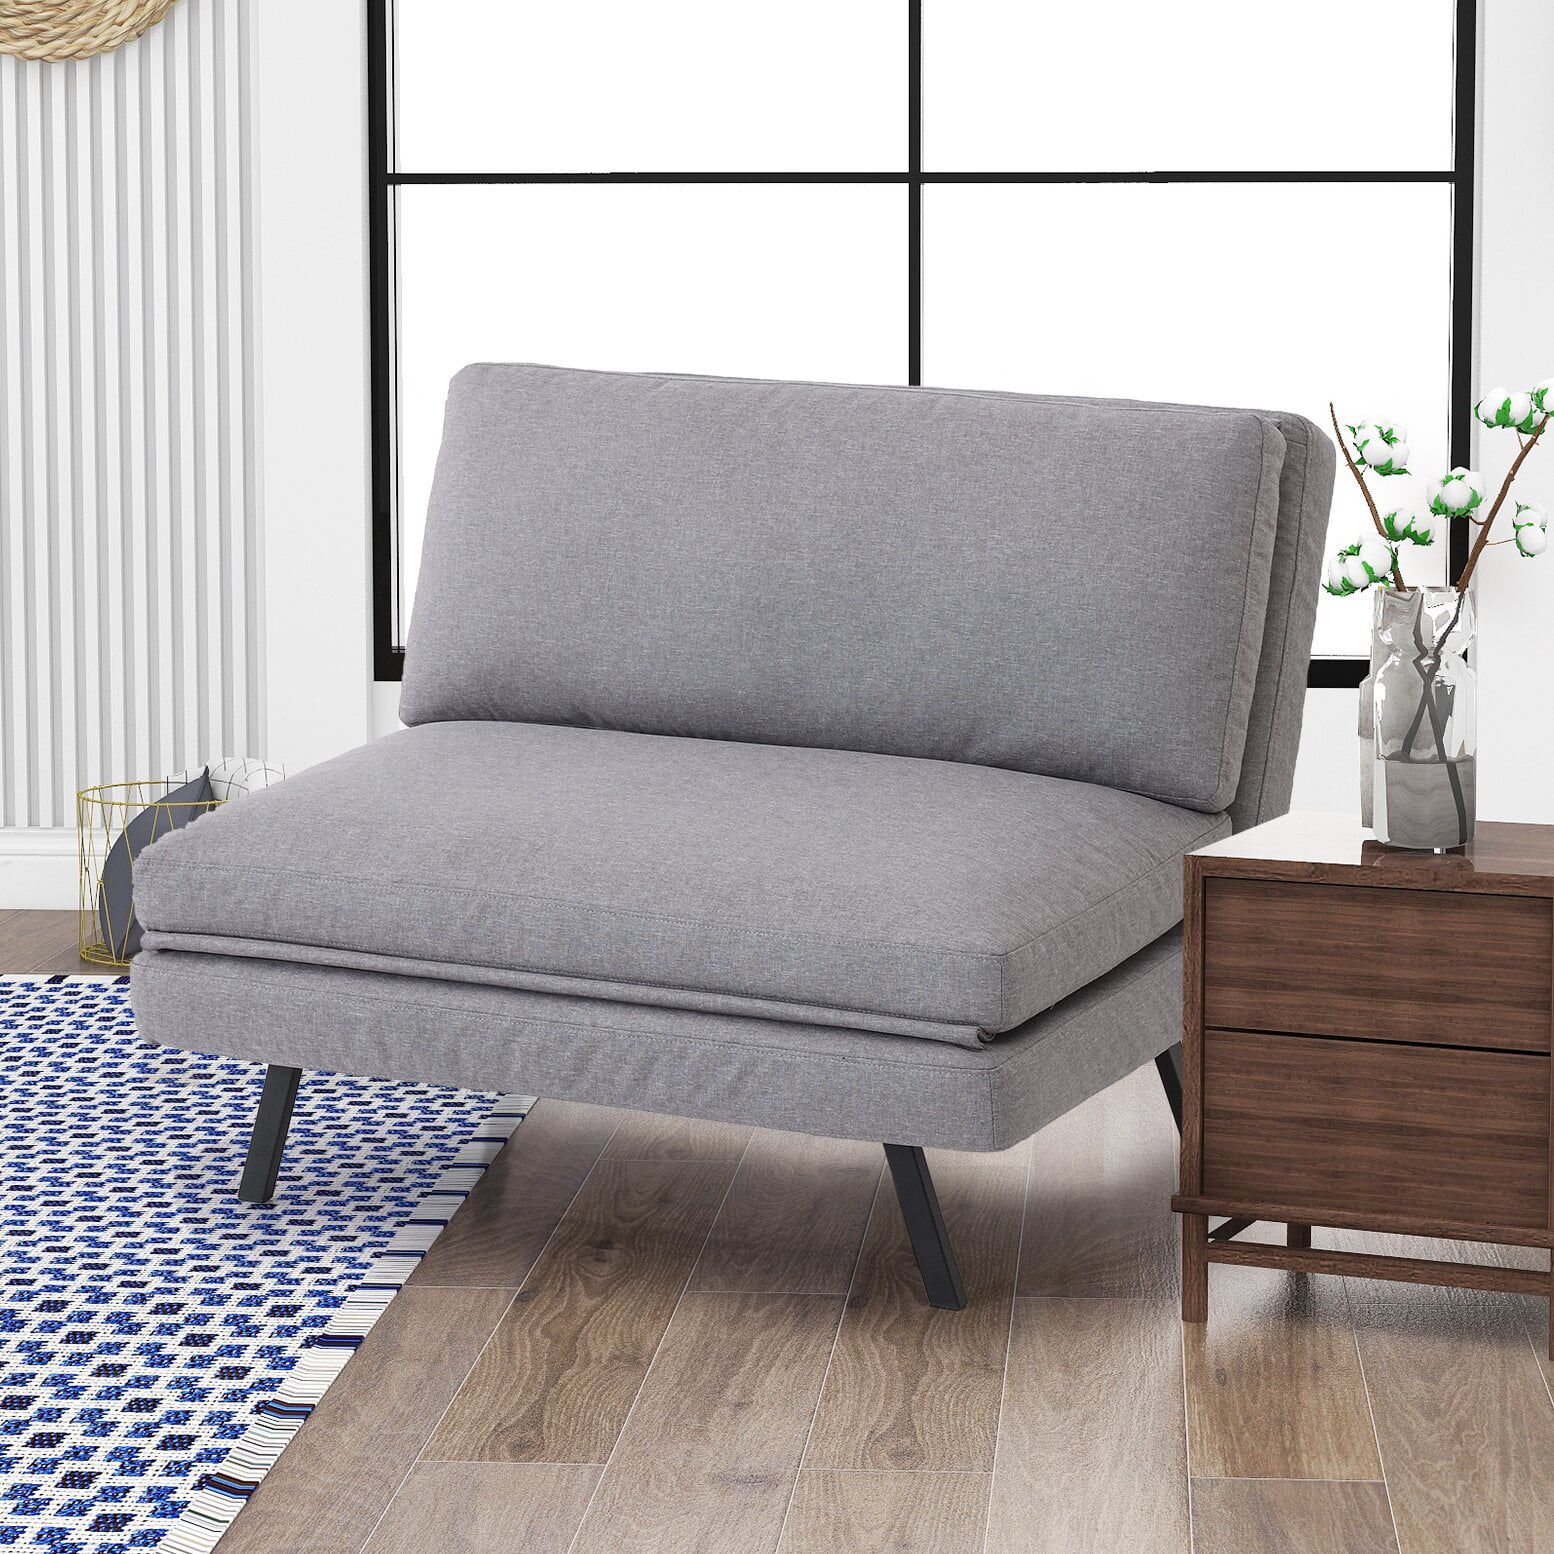 Smiaoer Tri Fold Fabric Convertible Futon, Sleeper Sofa Bed Flip Chair Regarding 4 In 1 Convertible Sleeper Chair Beds (Gallery 19 of 20)